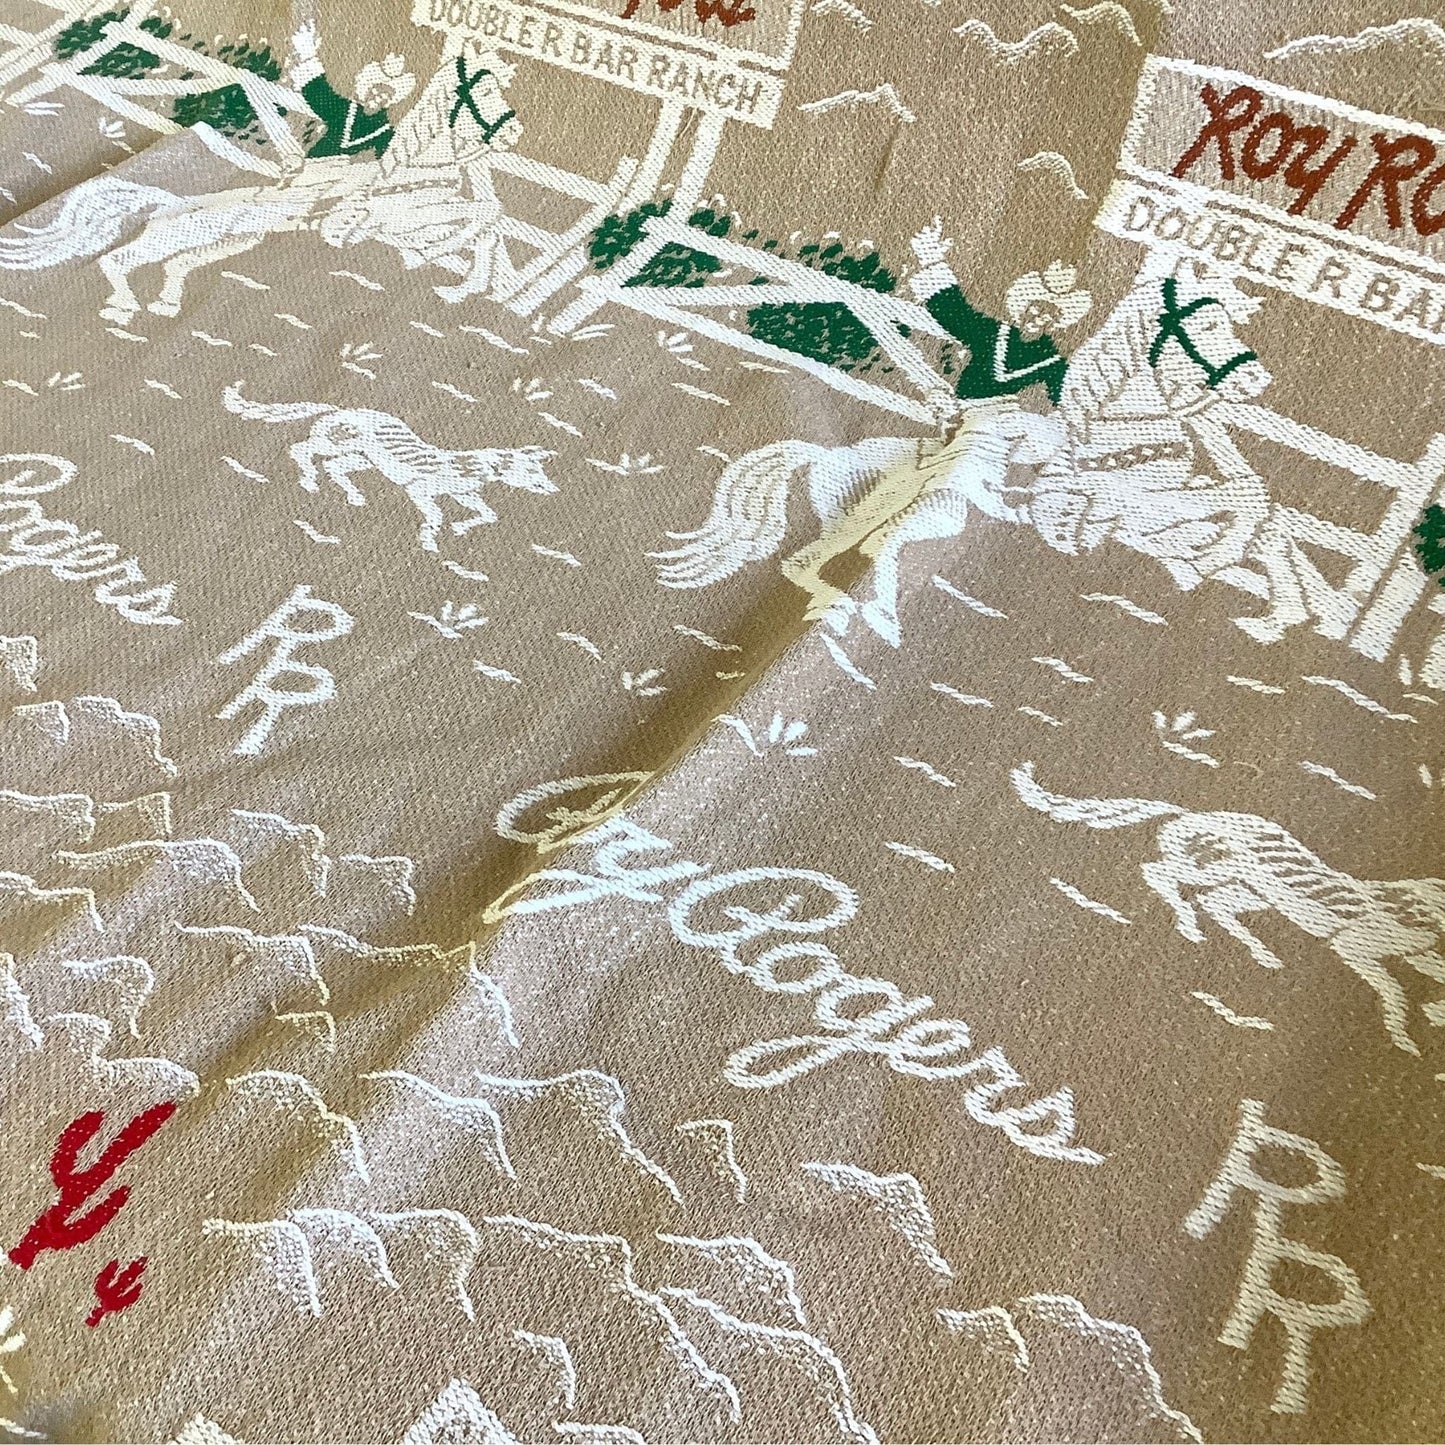 Vintage Roy Rogers Blanket Multi / Cotton / Vintage 1950s